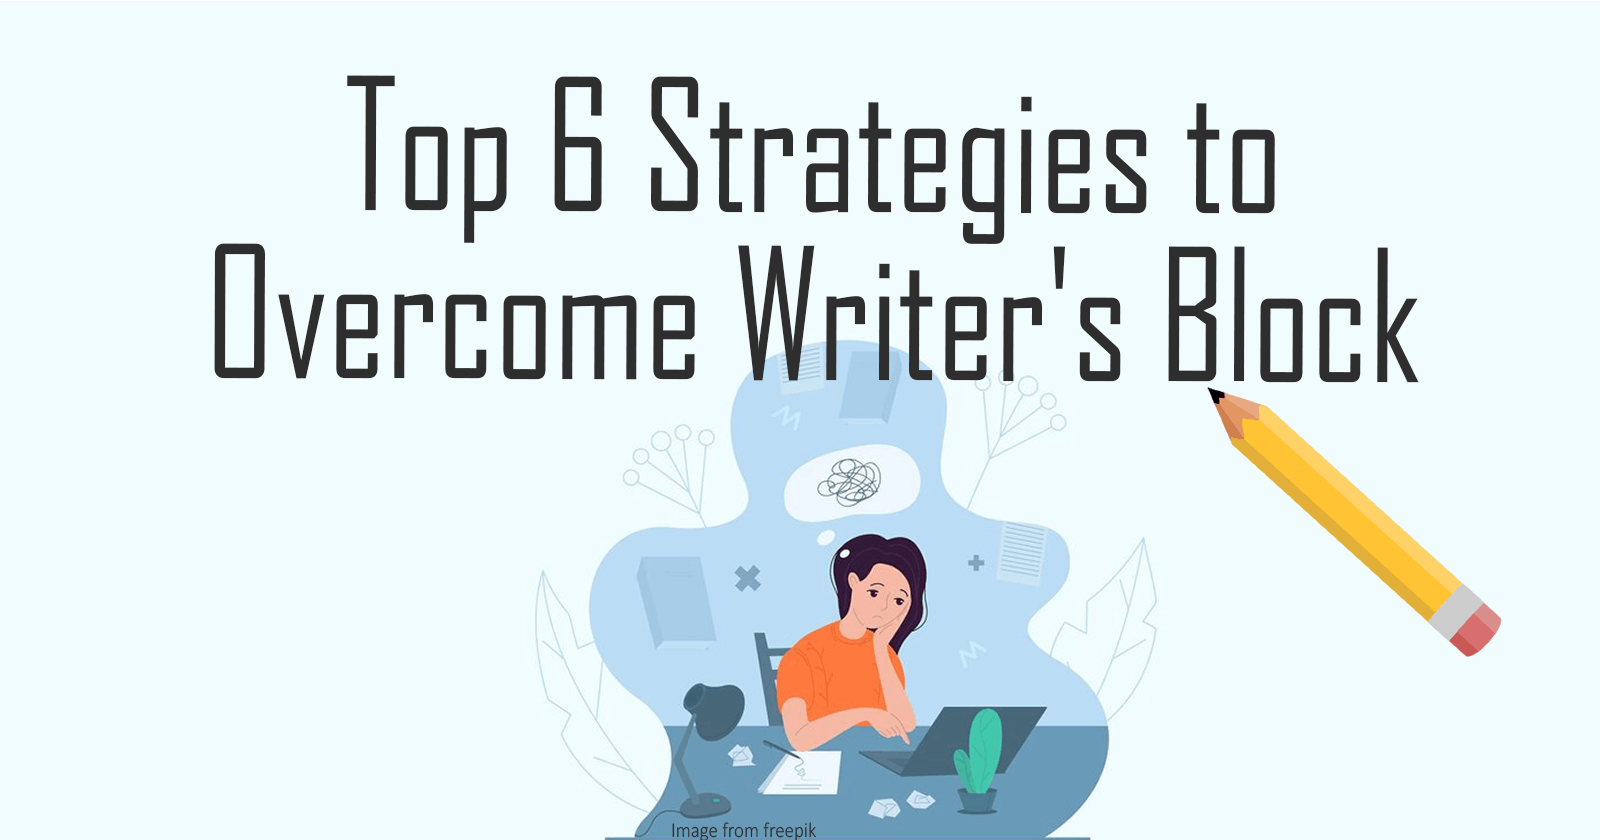 My Top 6 Strategies to Overcome Writer's Block